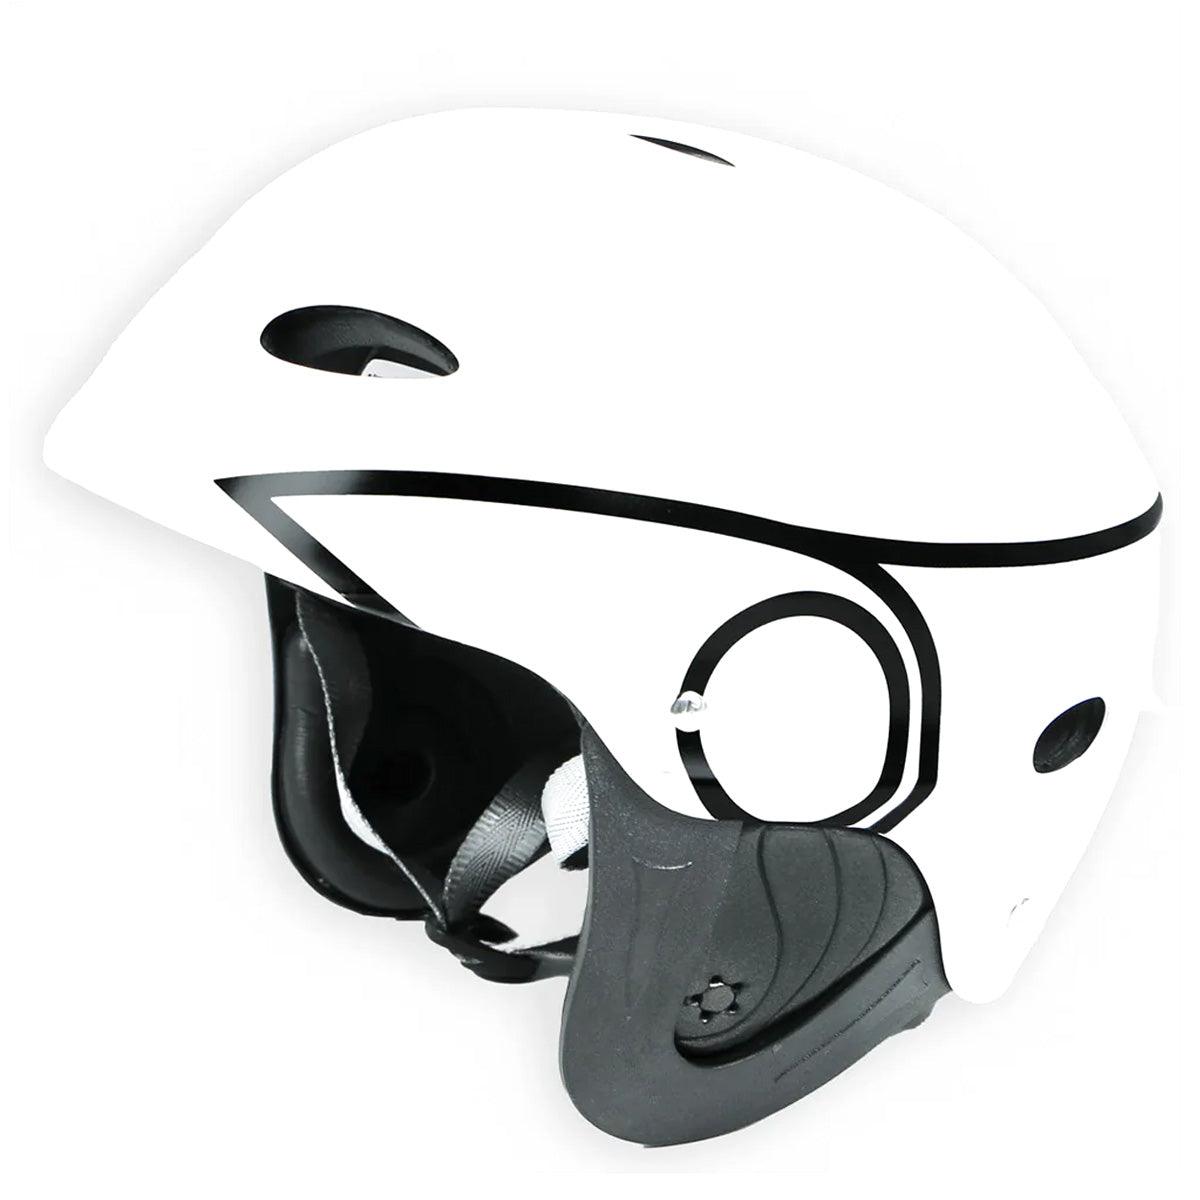 Sooruz Ride Helmet - Kitesurf